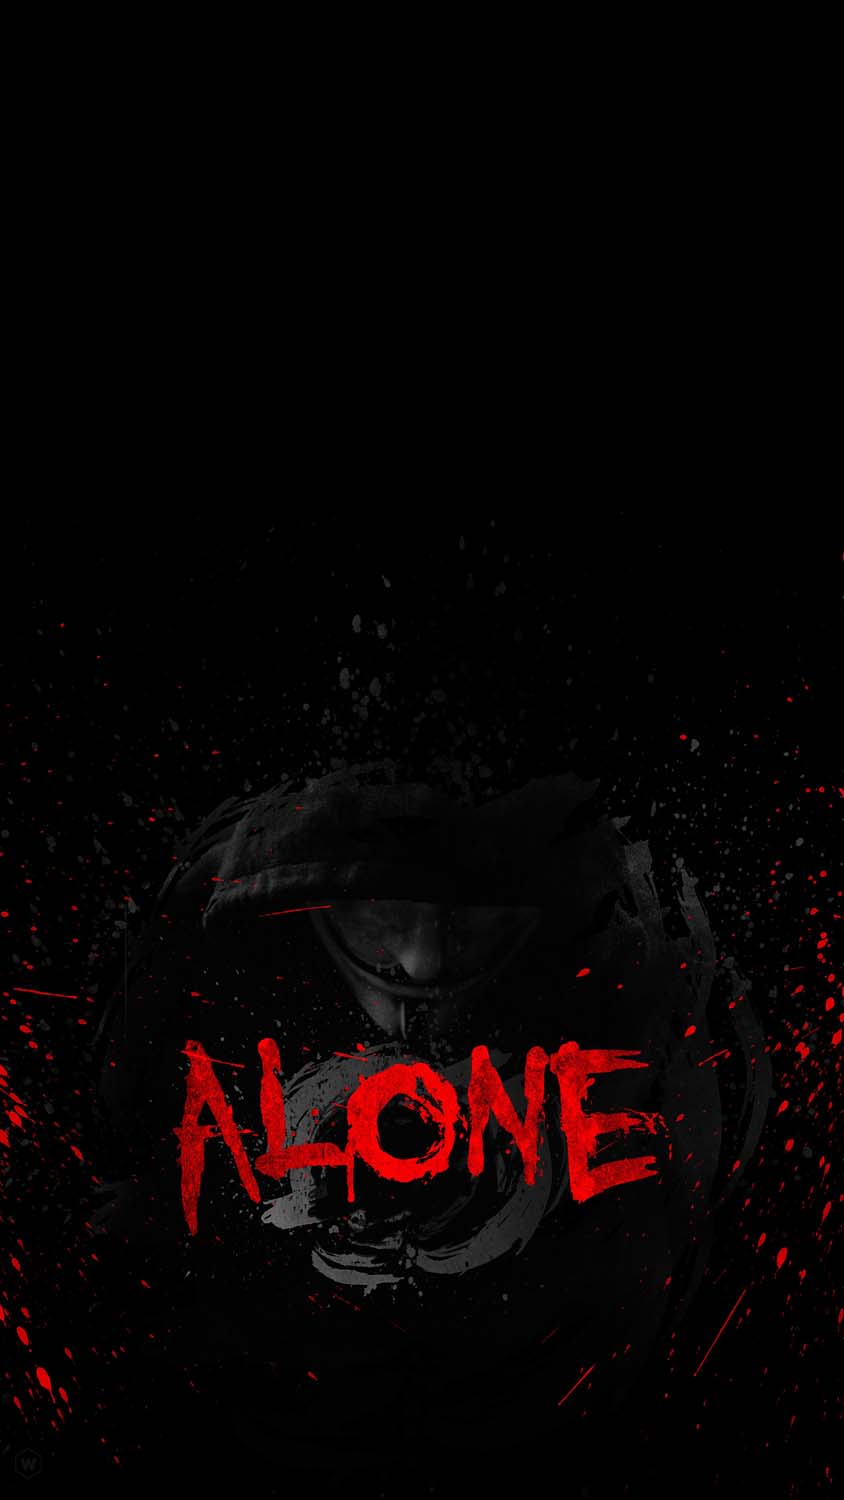 Alone in Dark iPhone Wallpaper HD